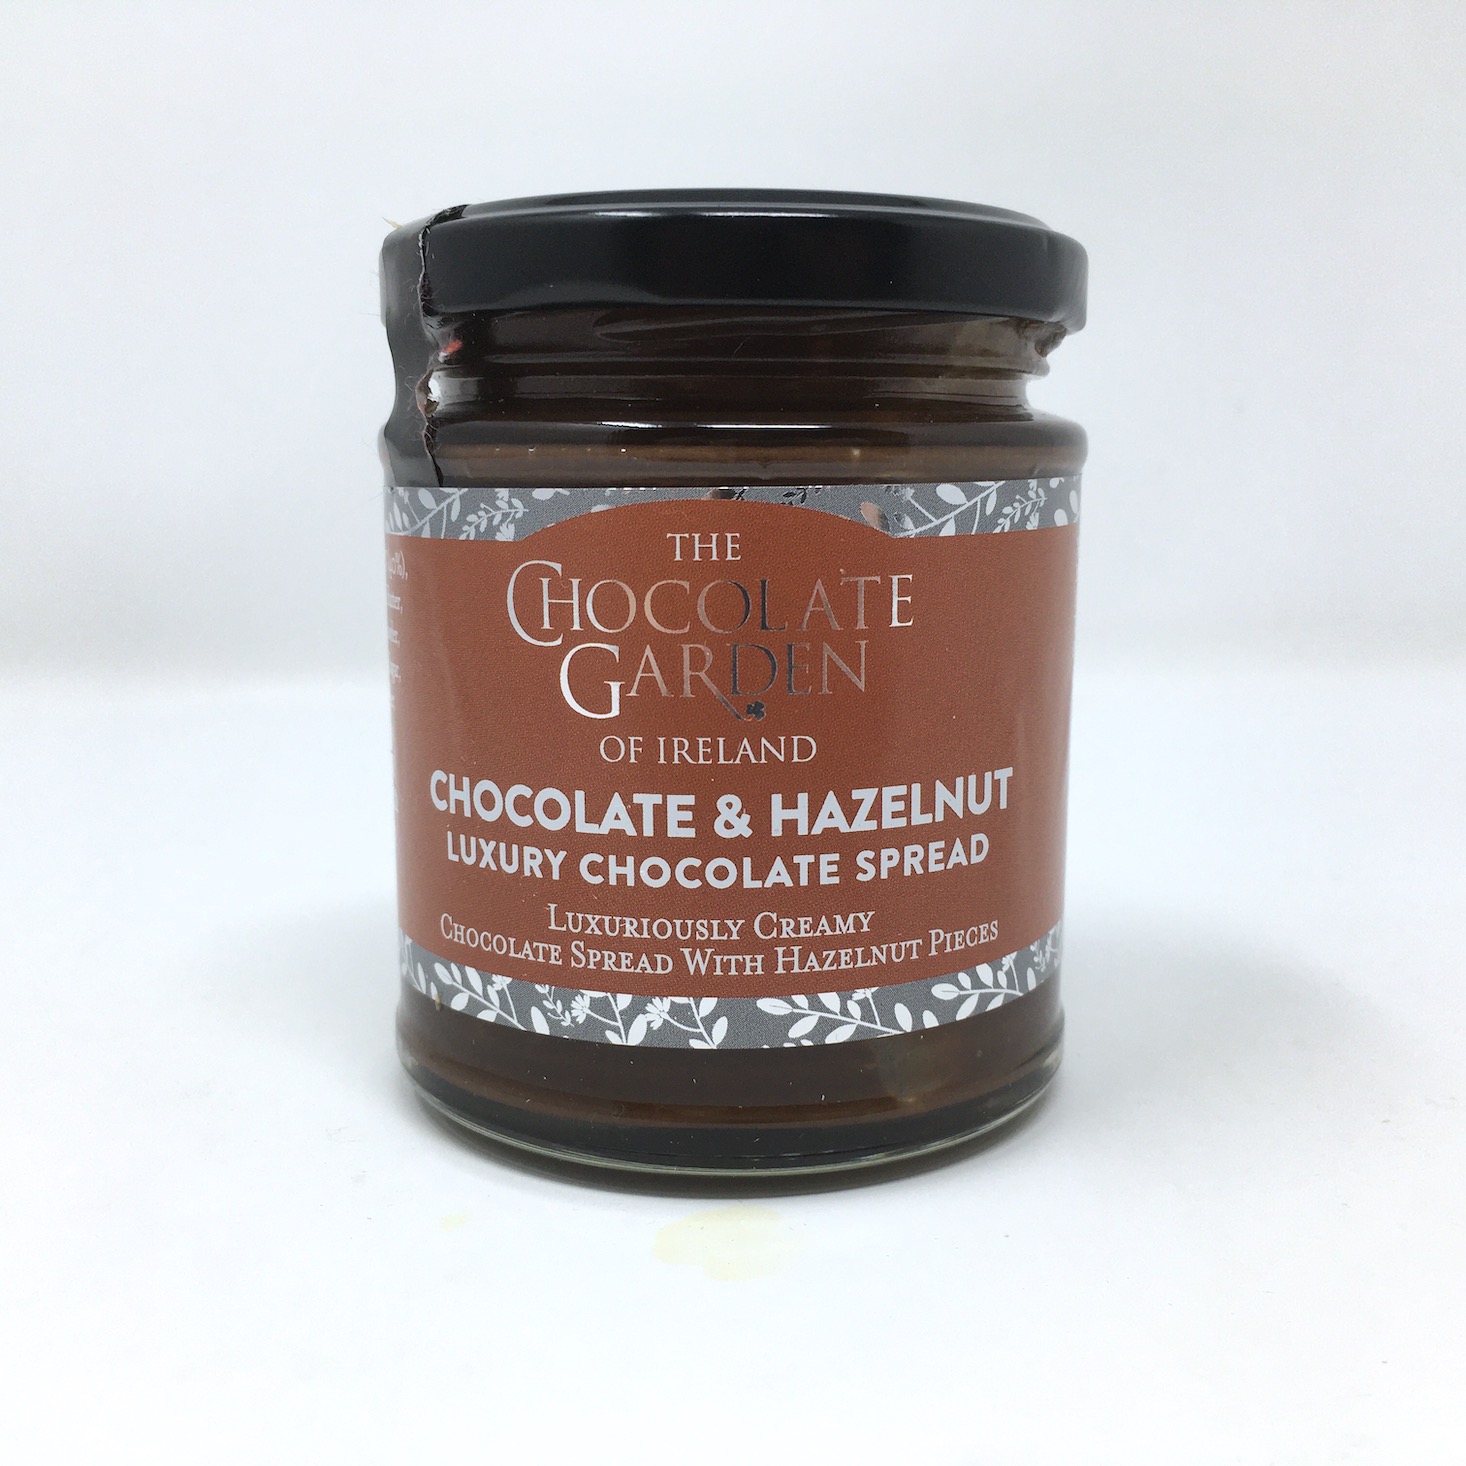 chocolate garden of ireland chocolate hazelnut spread jar front